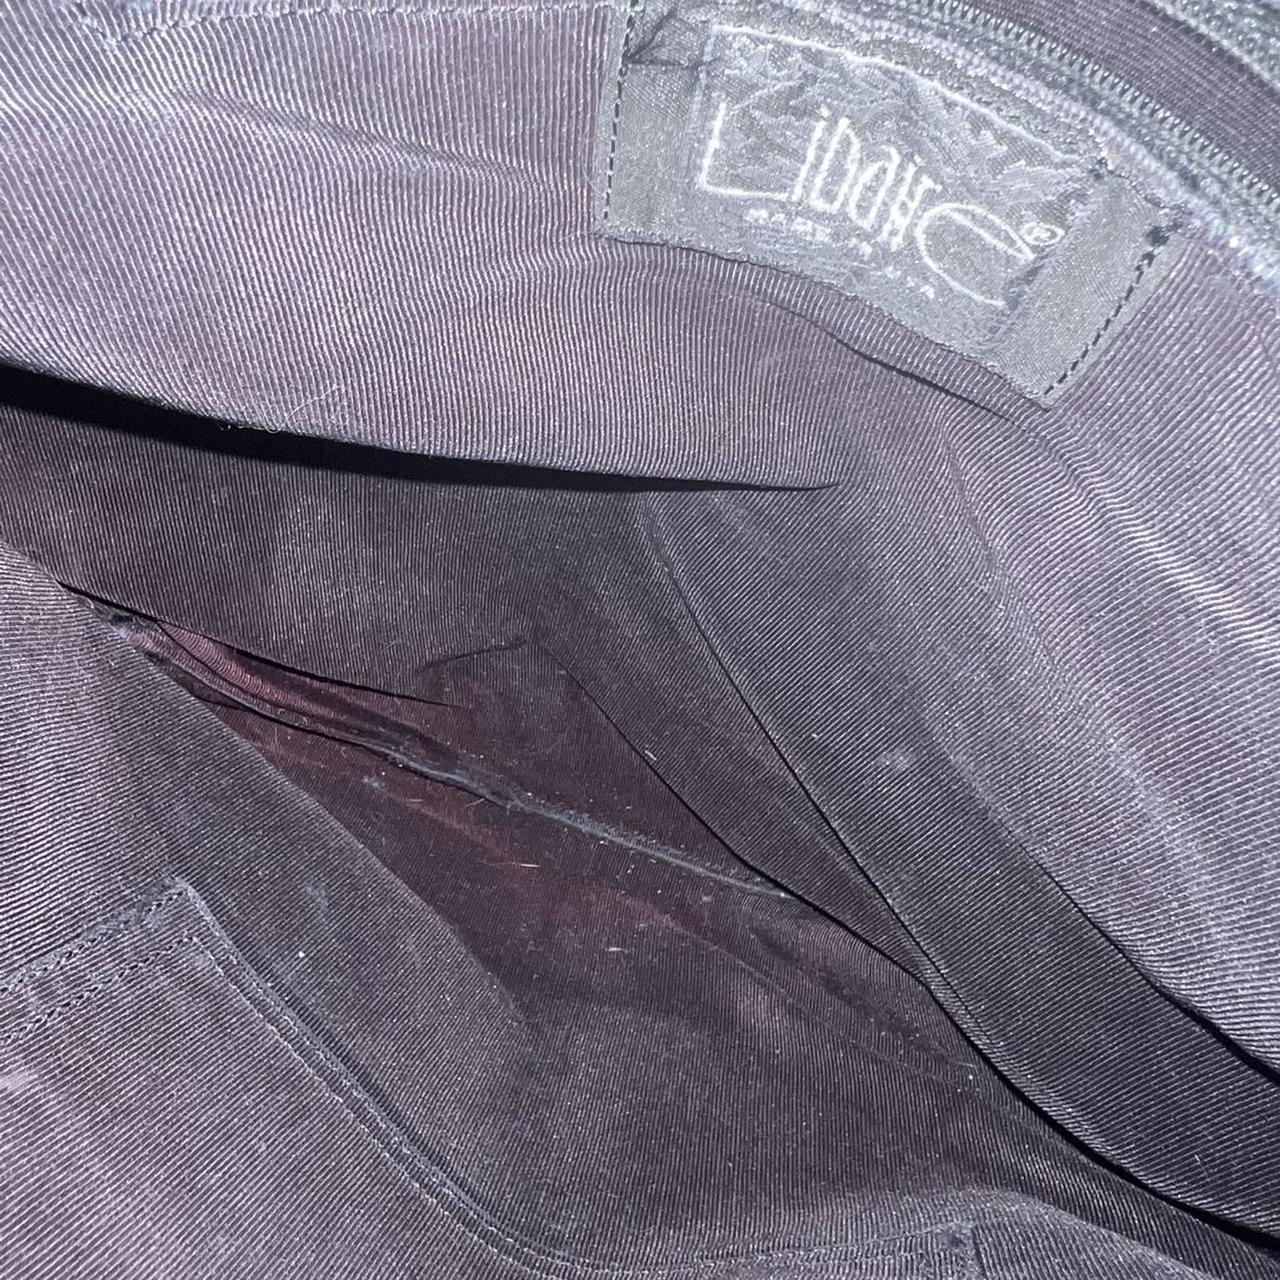 Libaire, Bags, Libaire Leather Backpack Purse Vintage Drop Shape Double  Straps Bag Tote Brown